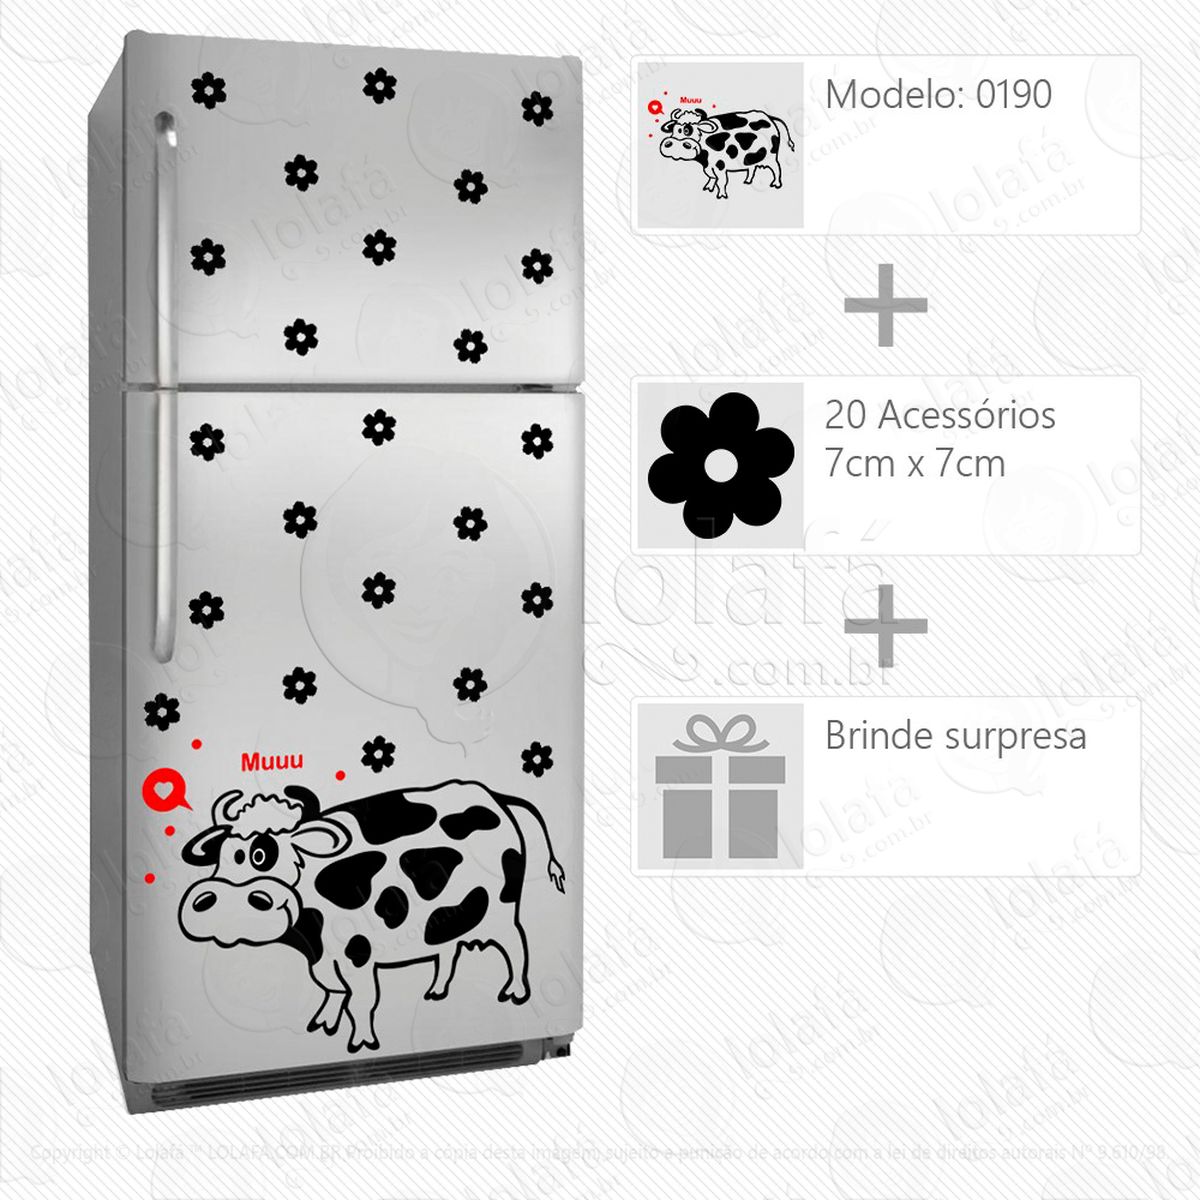 vaca adesivo para geladeira e frigobar - mod:190